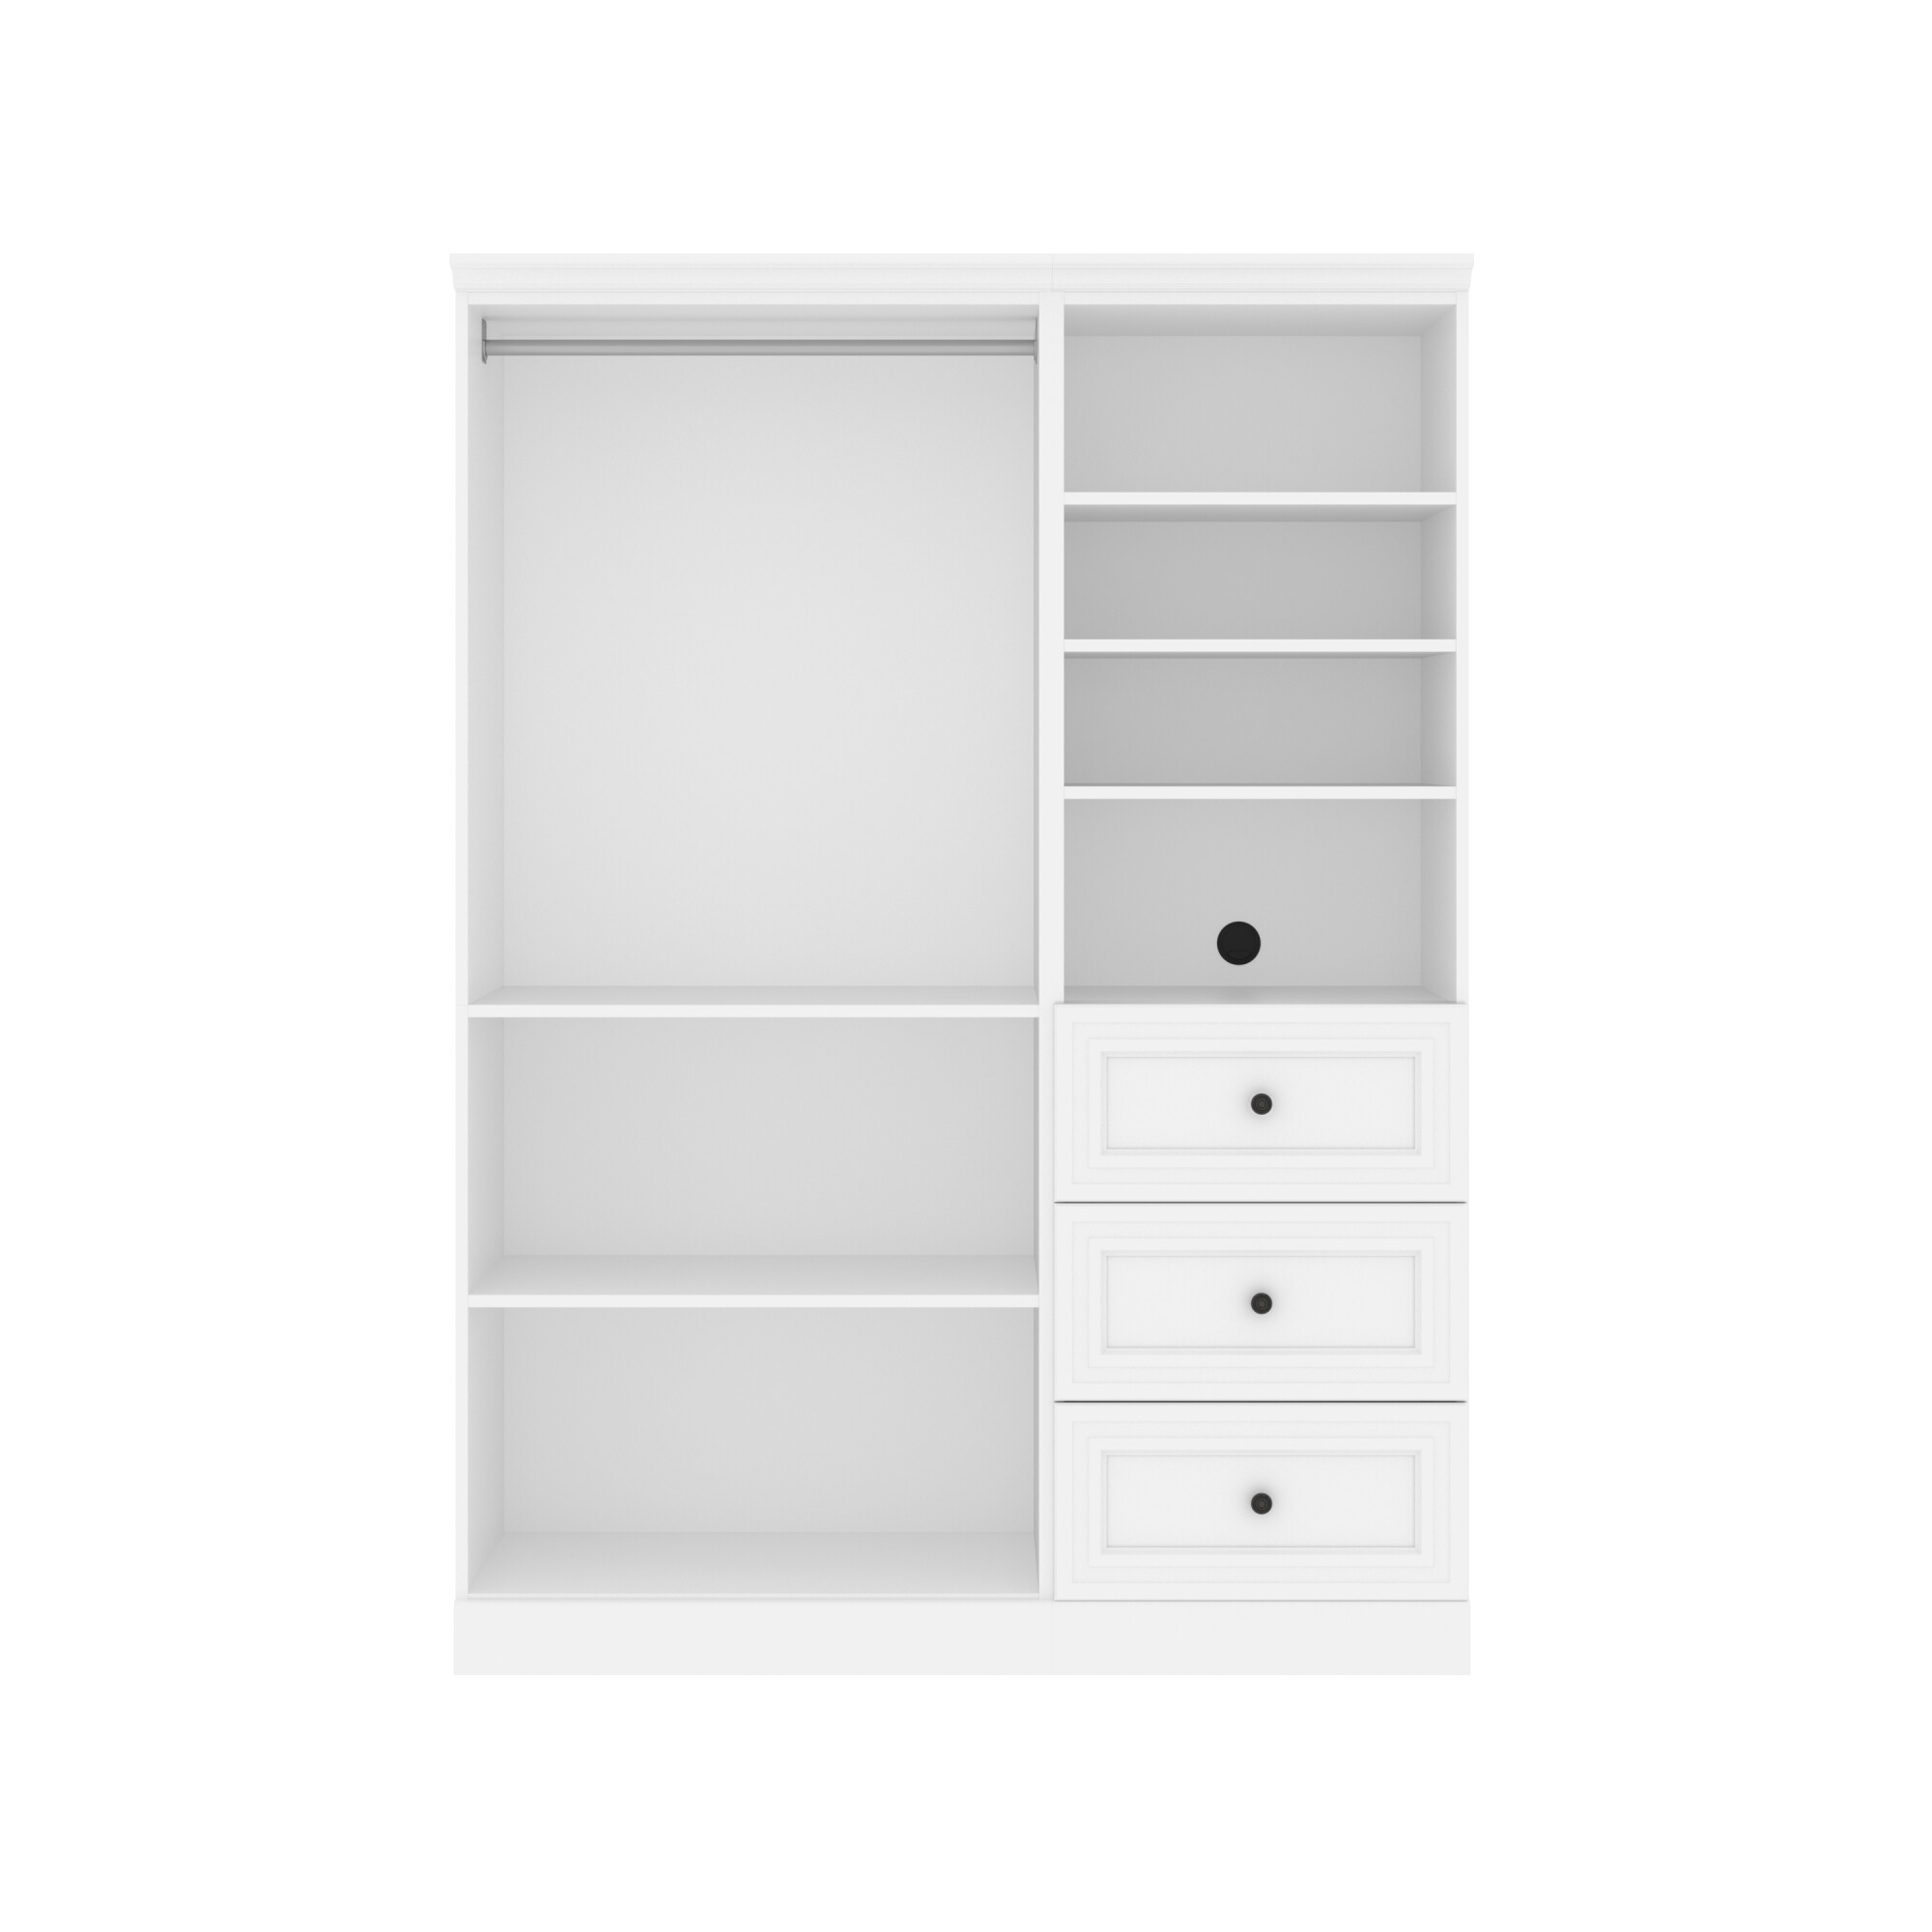 Versatile 61” Closet Organizer with Drawers in white